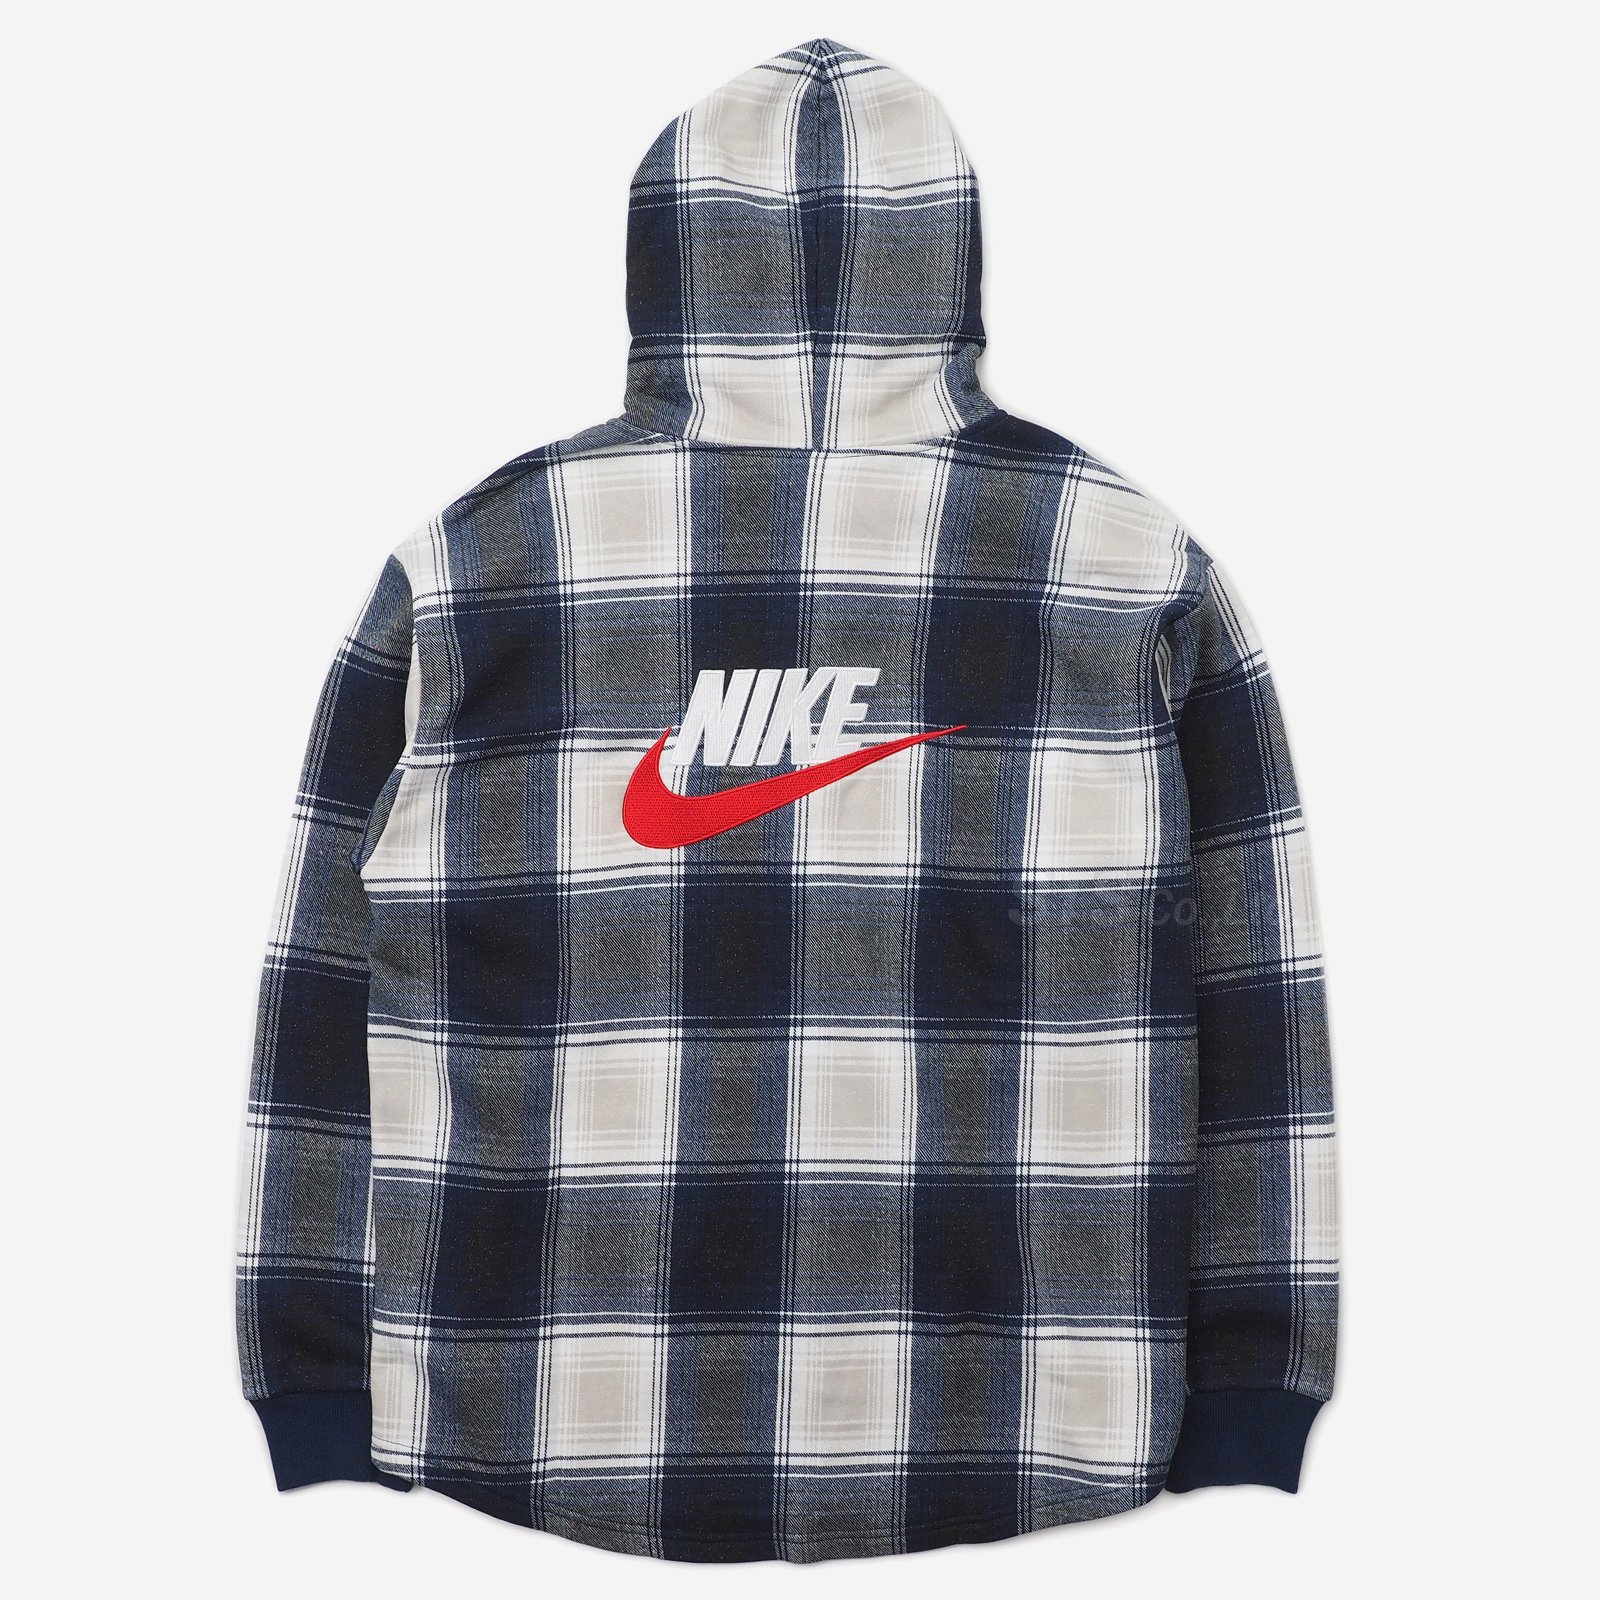 Supreme/Nike Plaid Hooded Sweatshirt - ParkSIDER